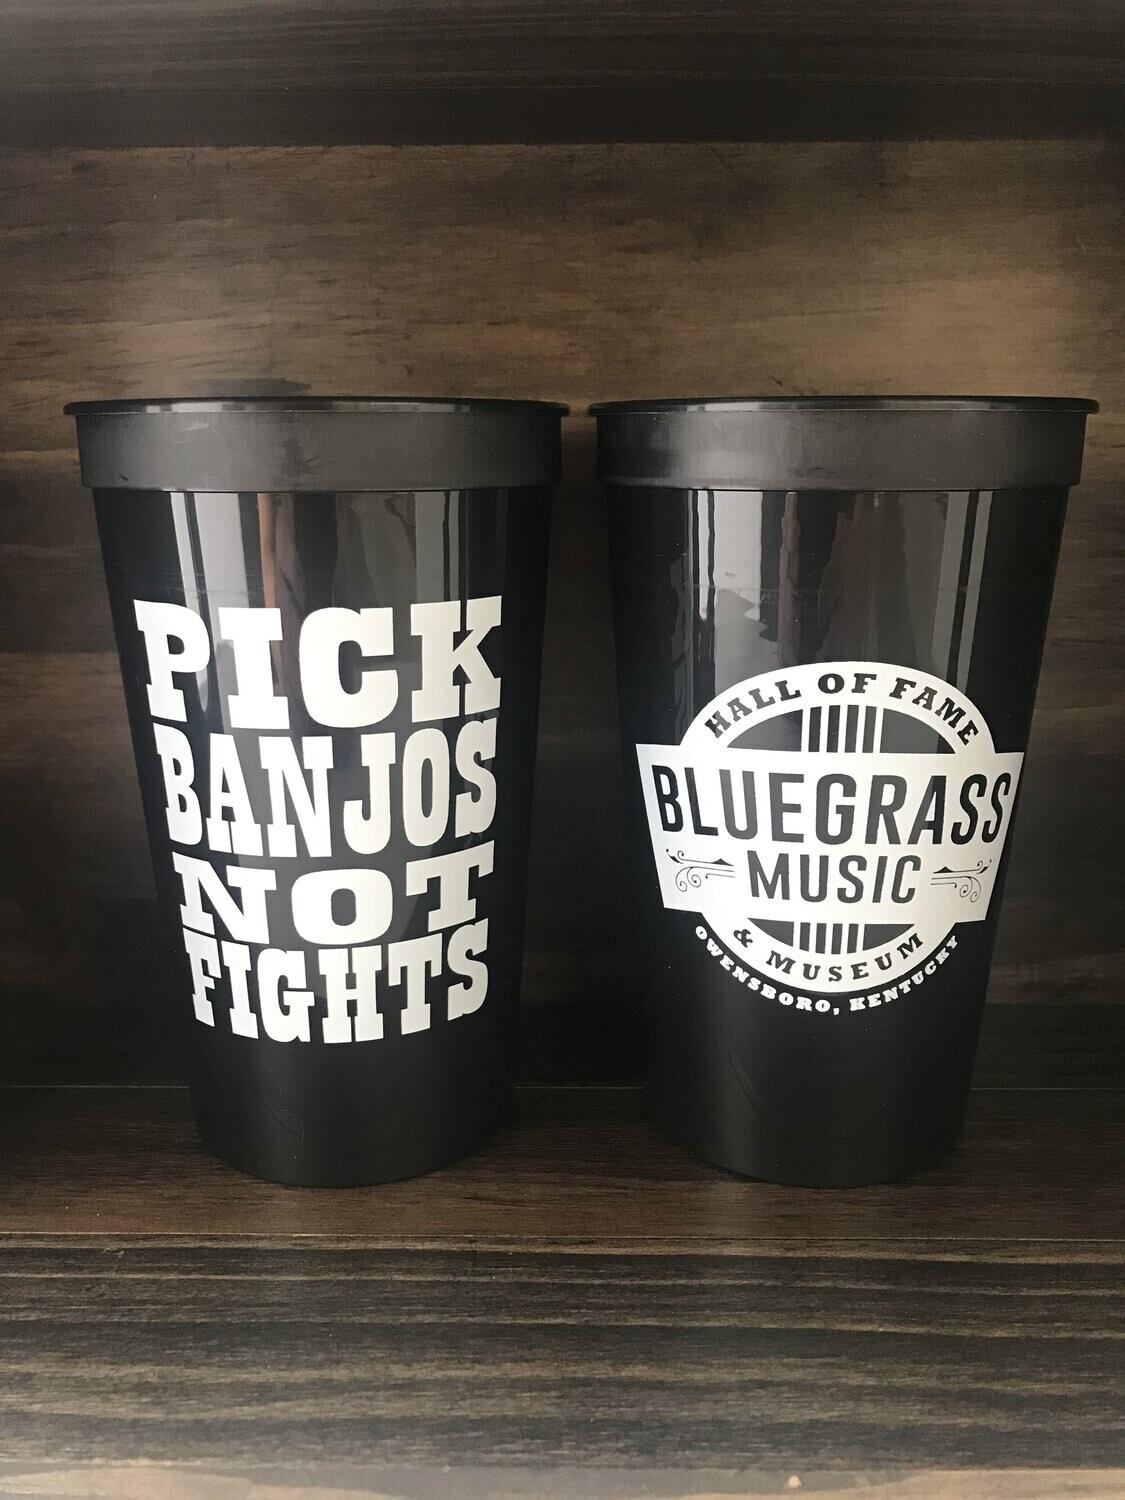 Pick Banjos Cup